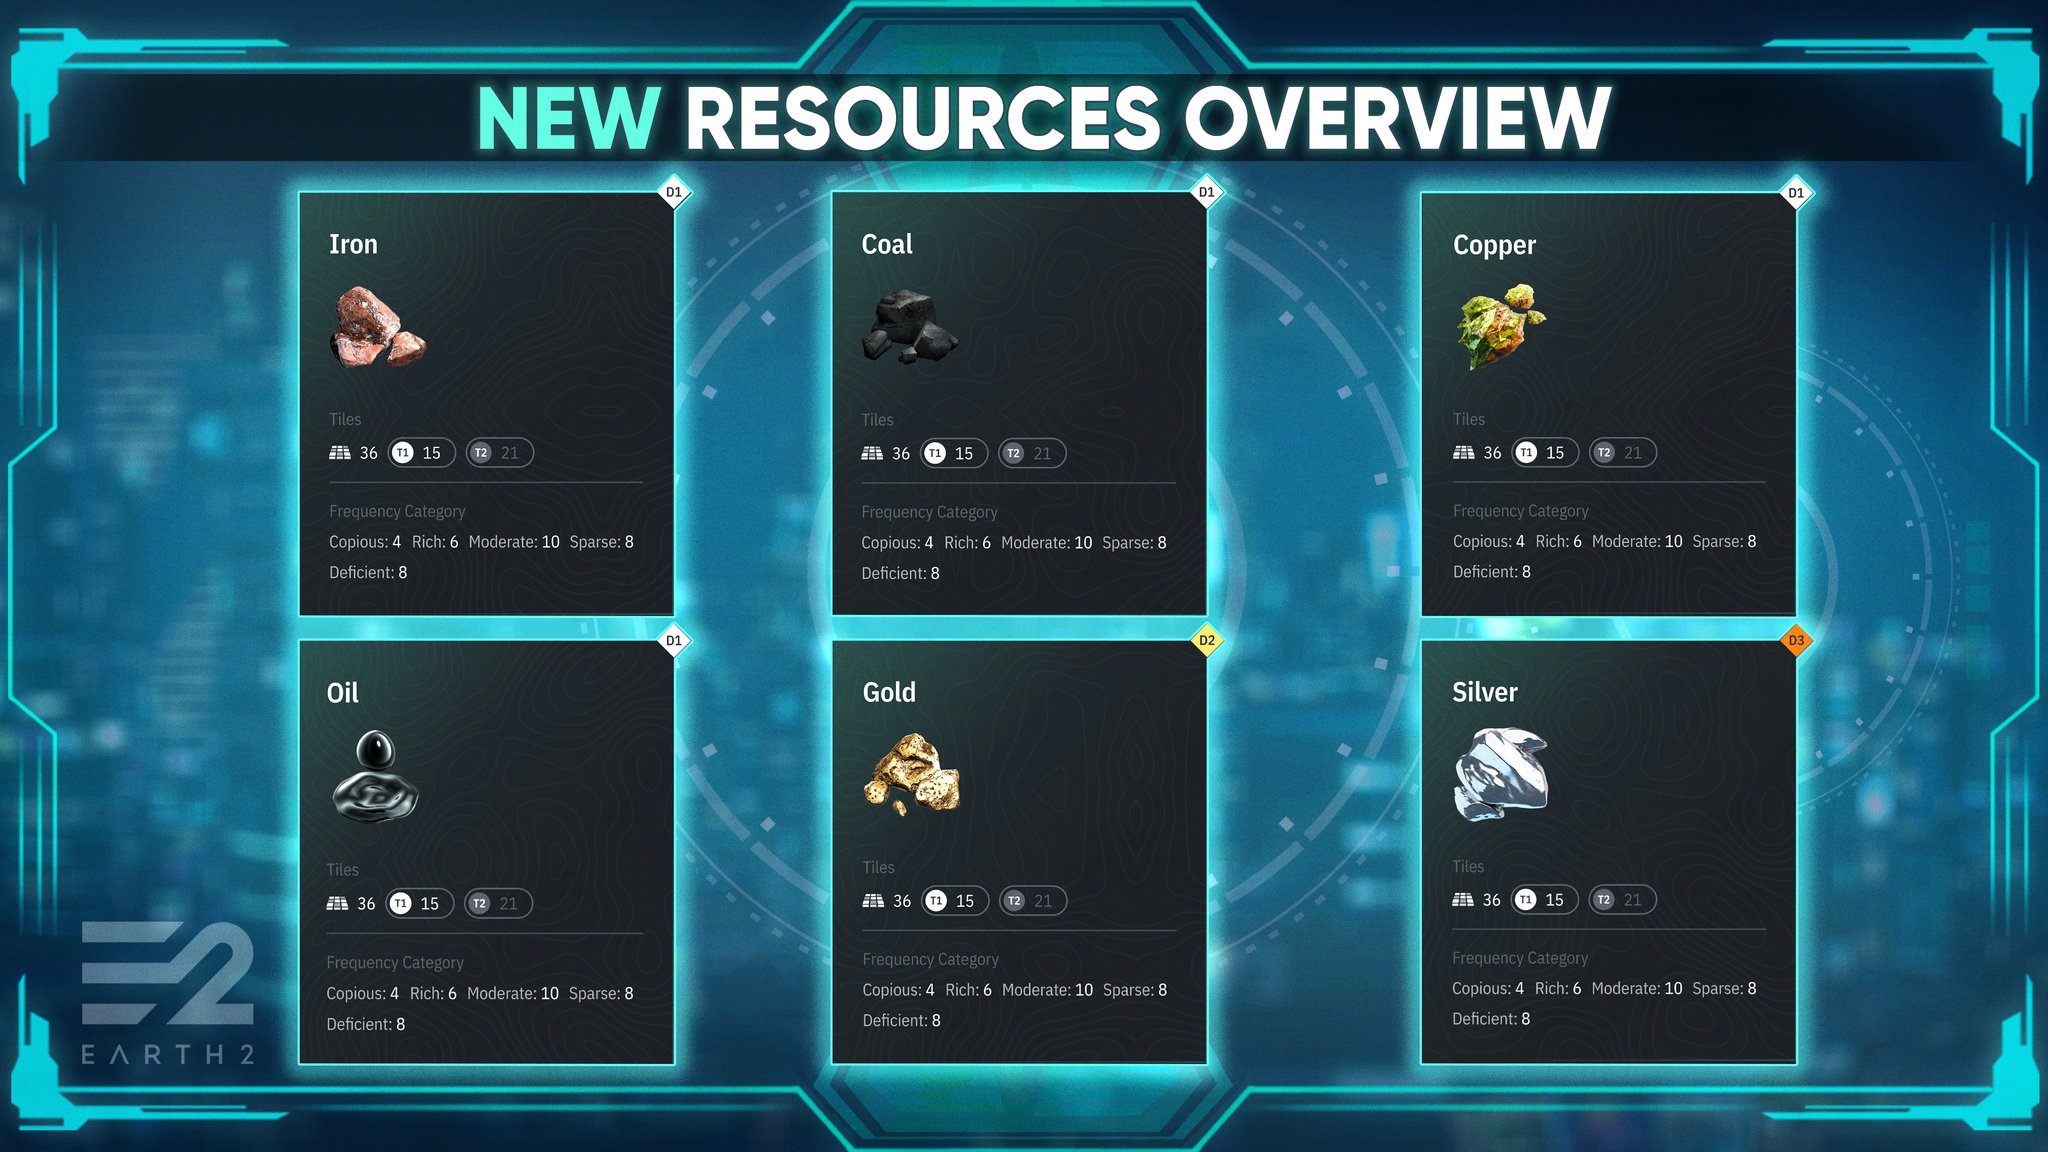 e2 resources